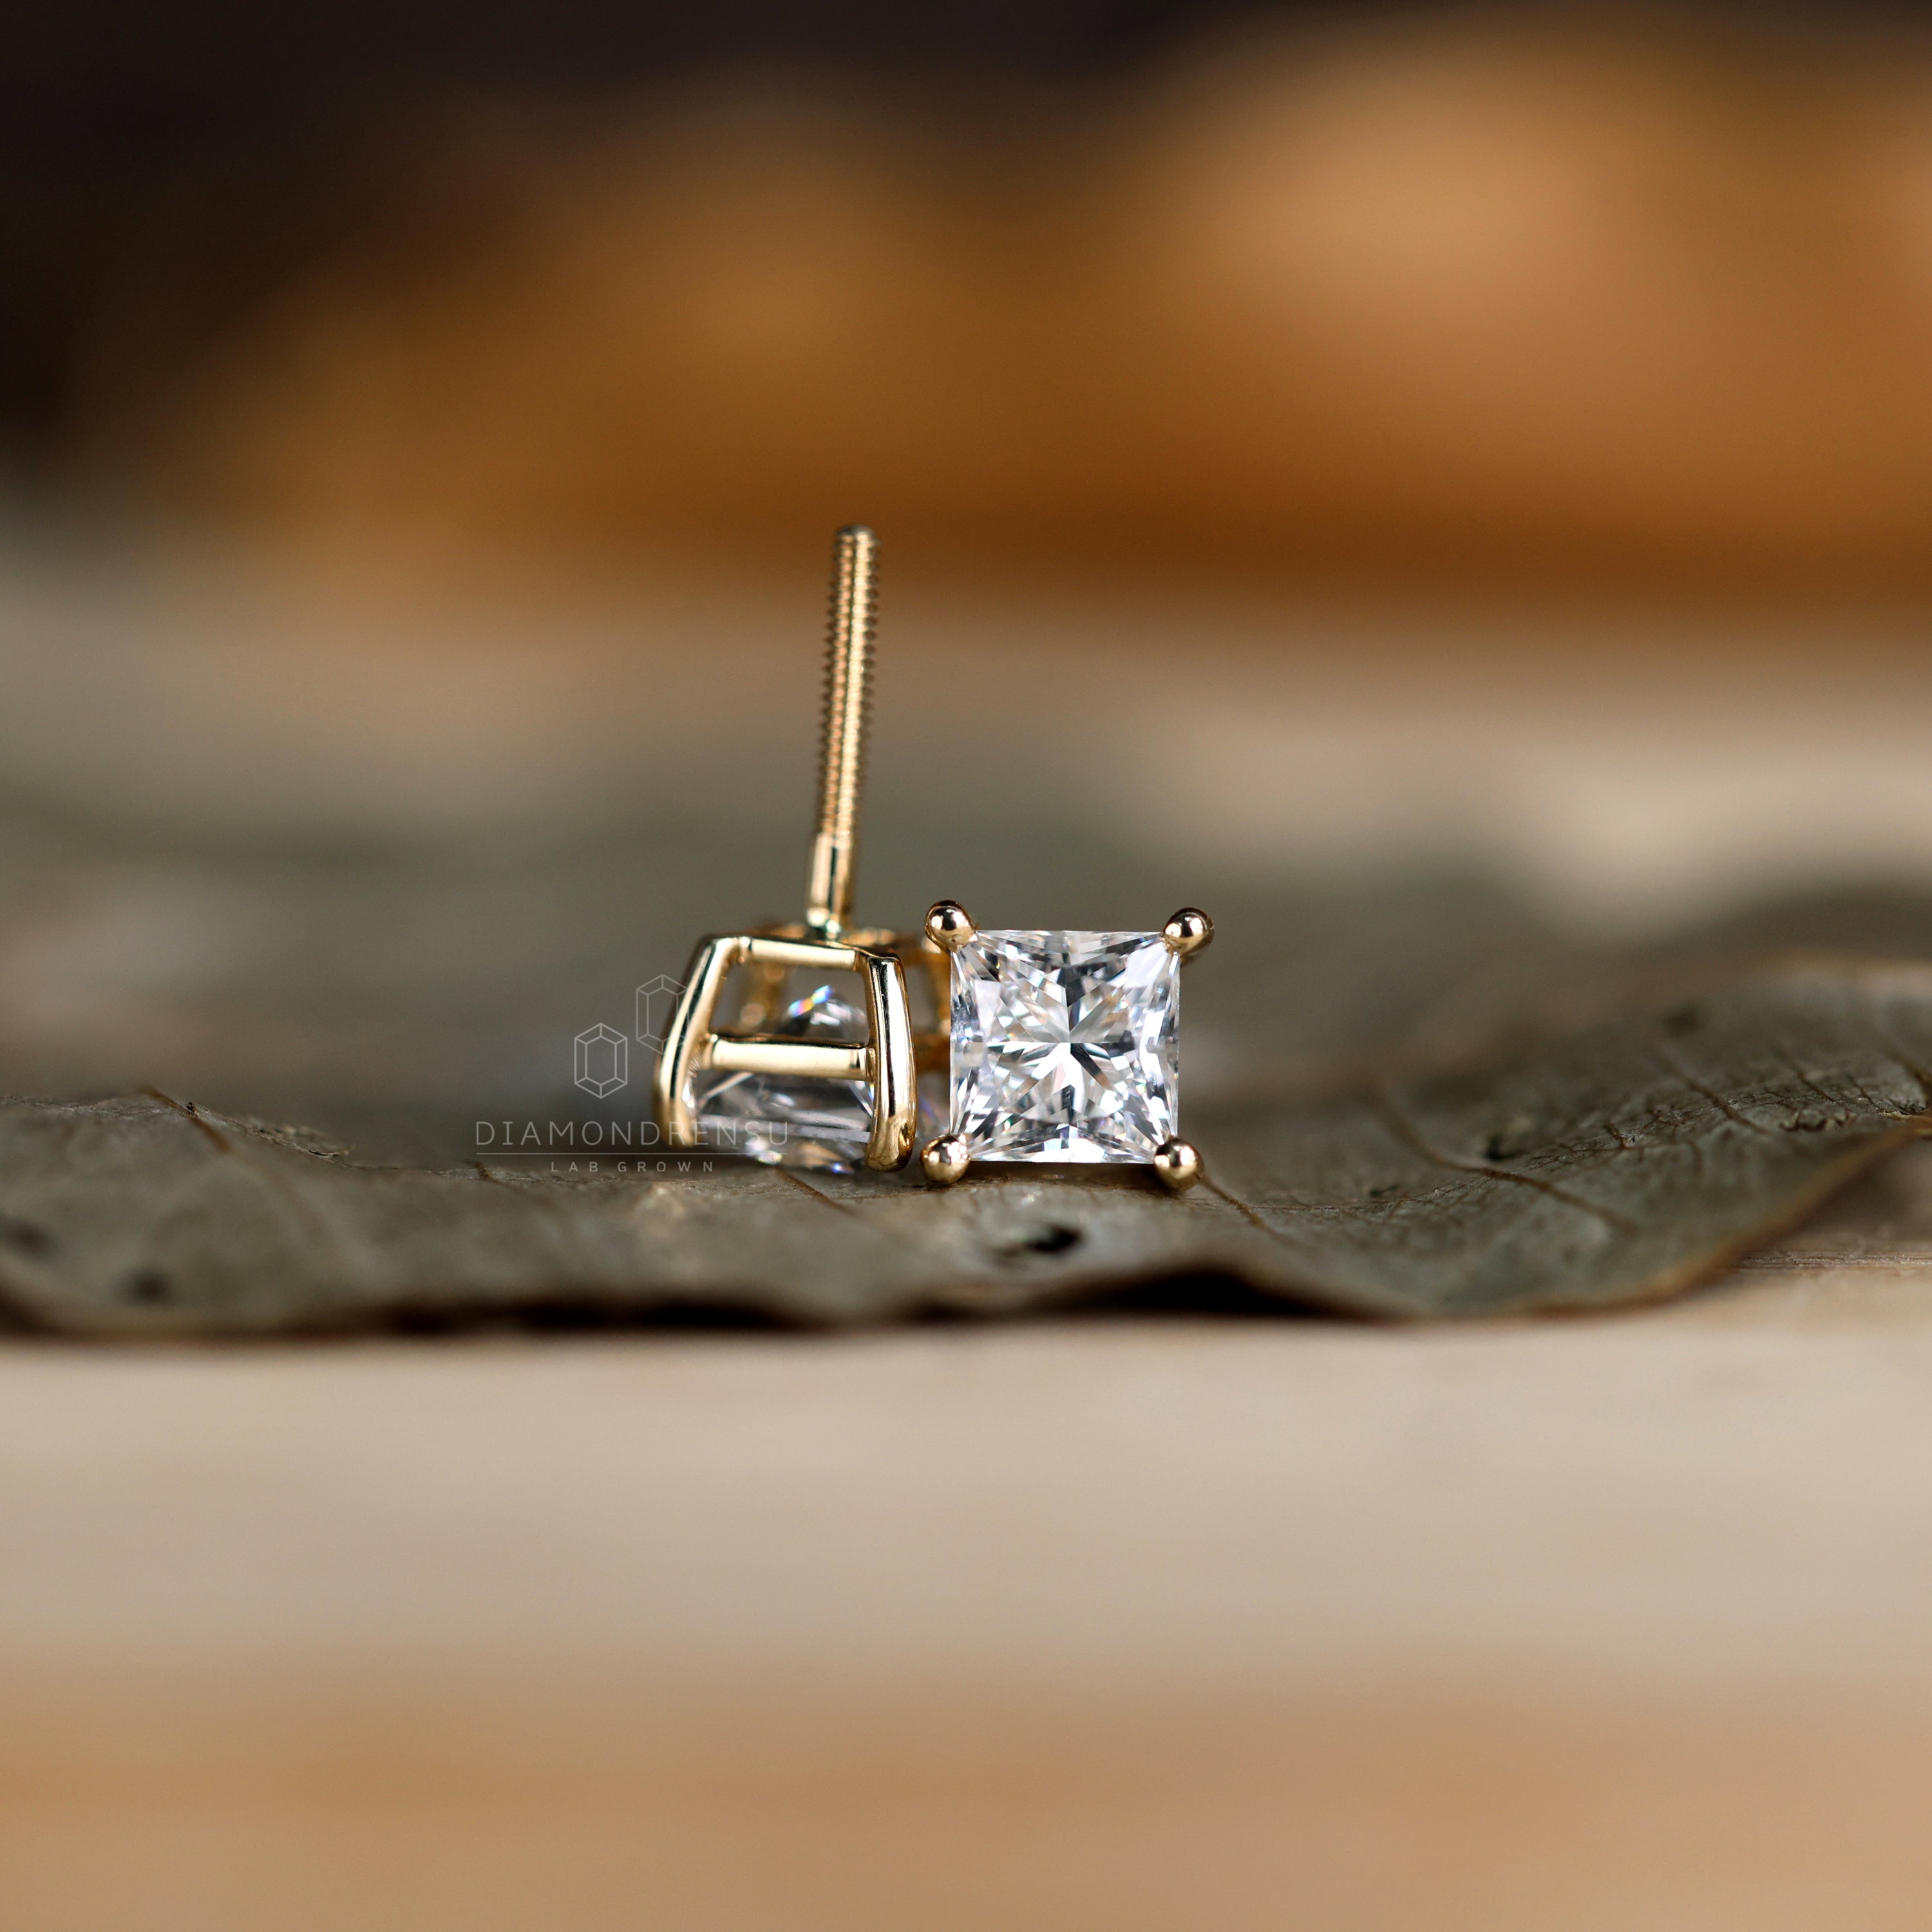 lab created diamond screw back earrings - diamondrensu